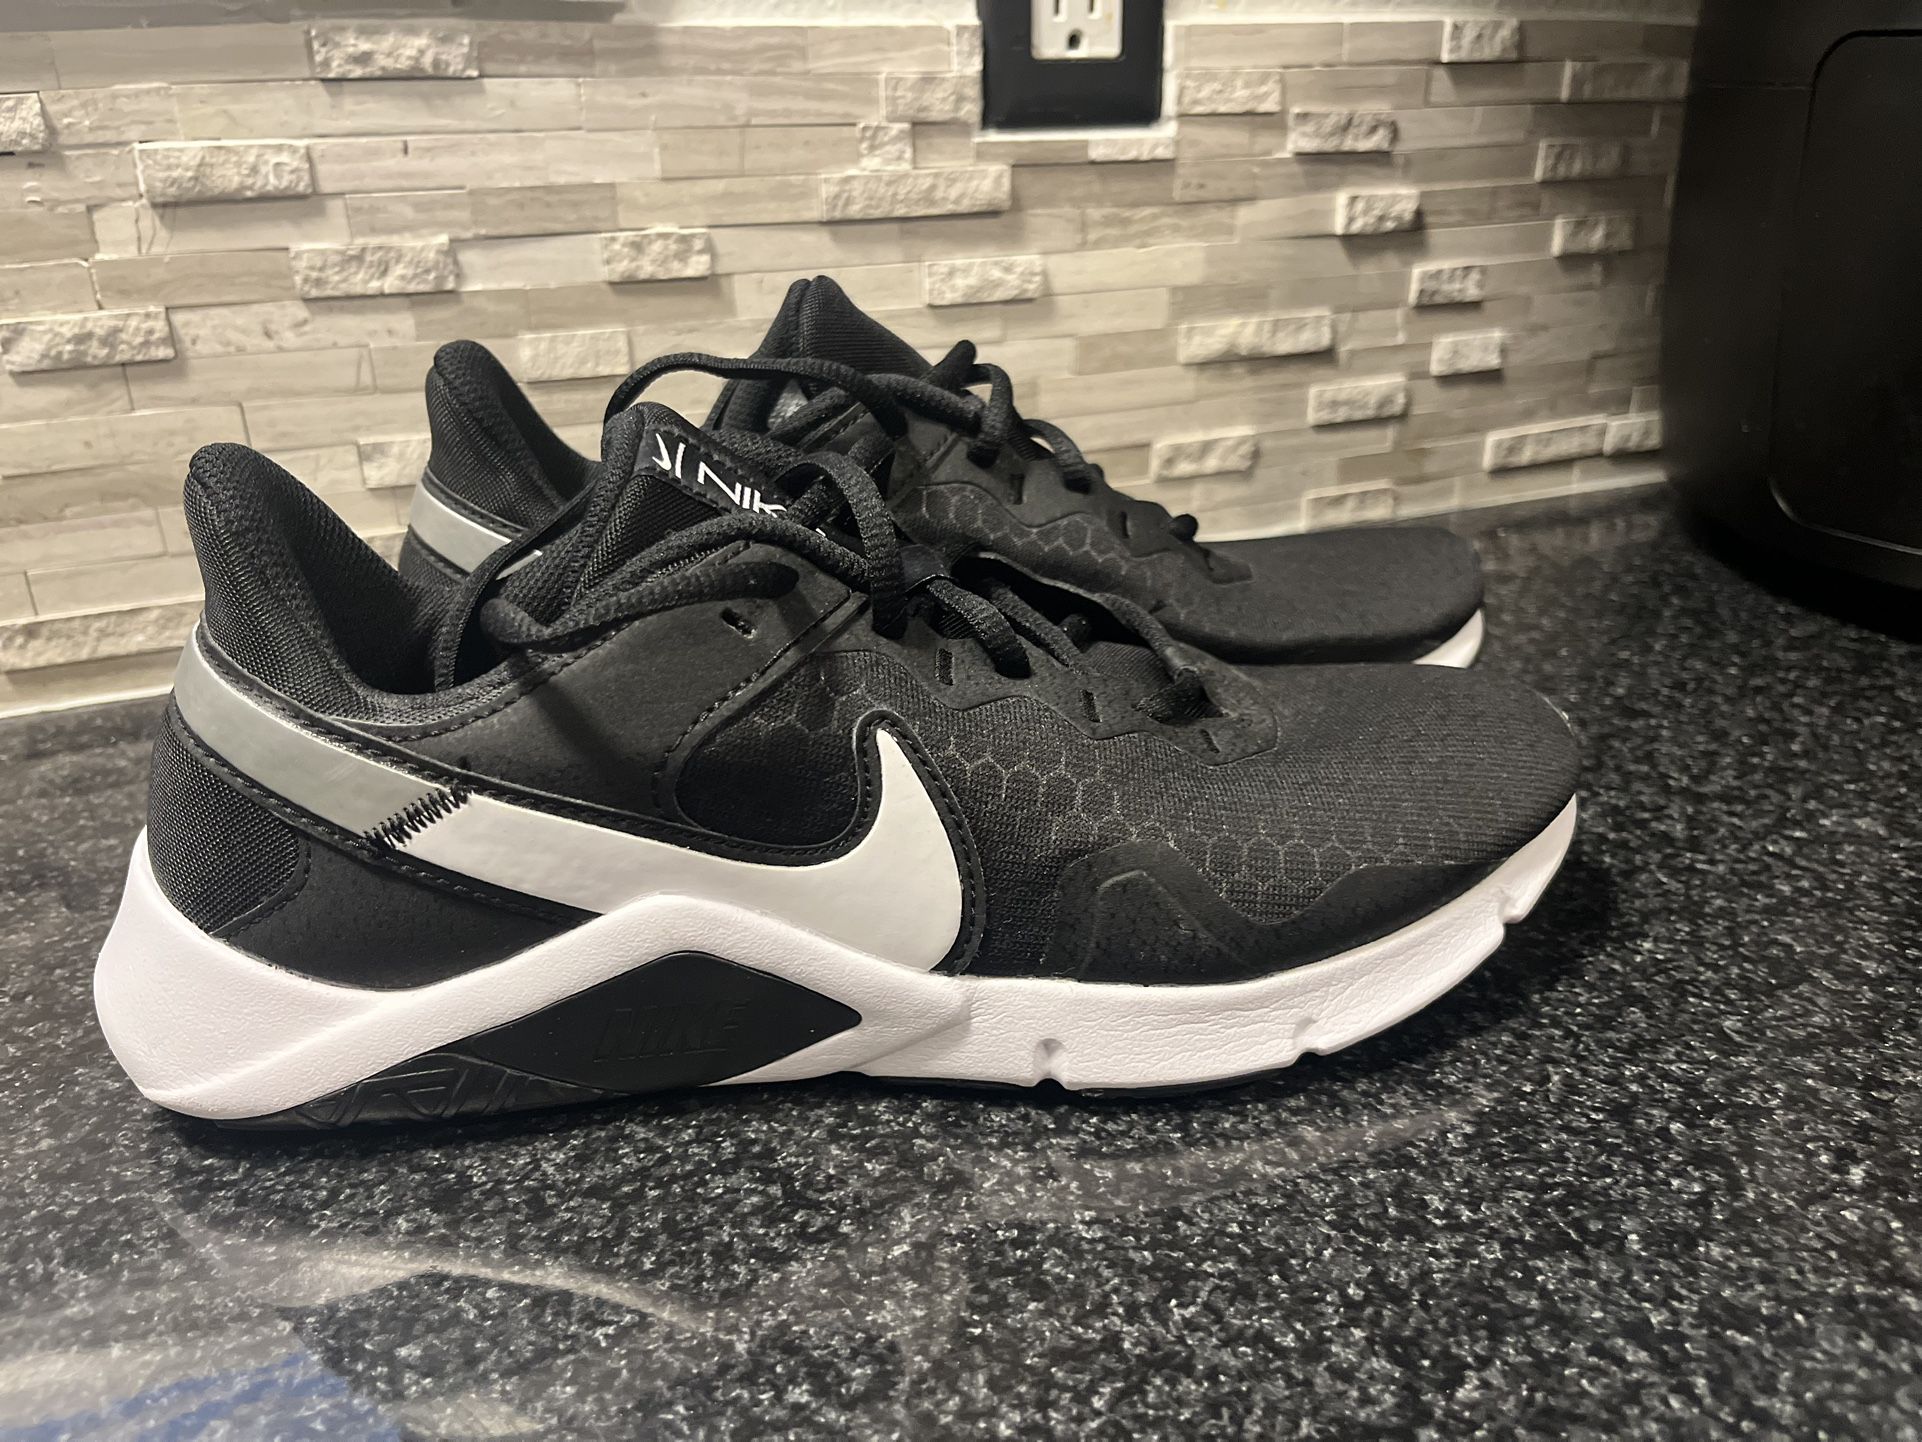 Men’s 8.5 Nike Shoes